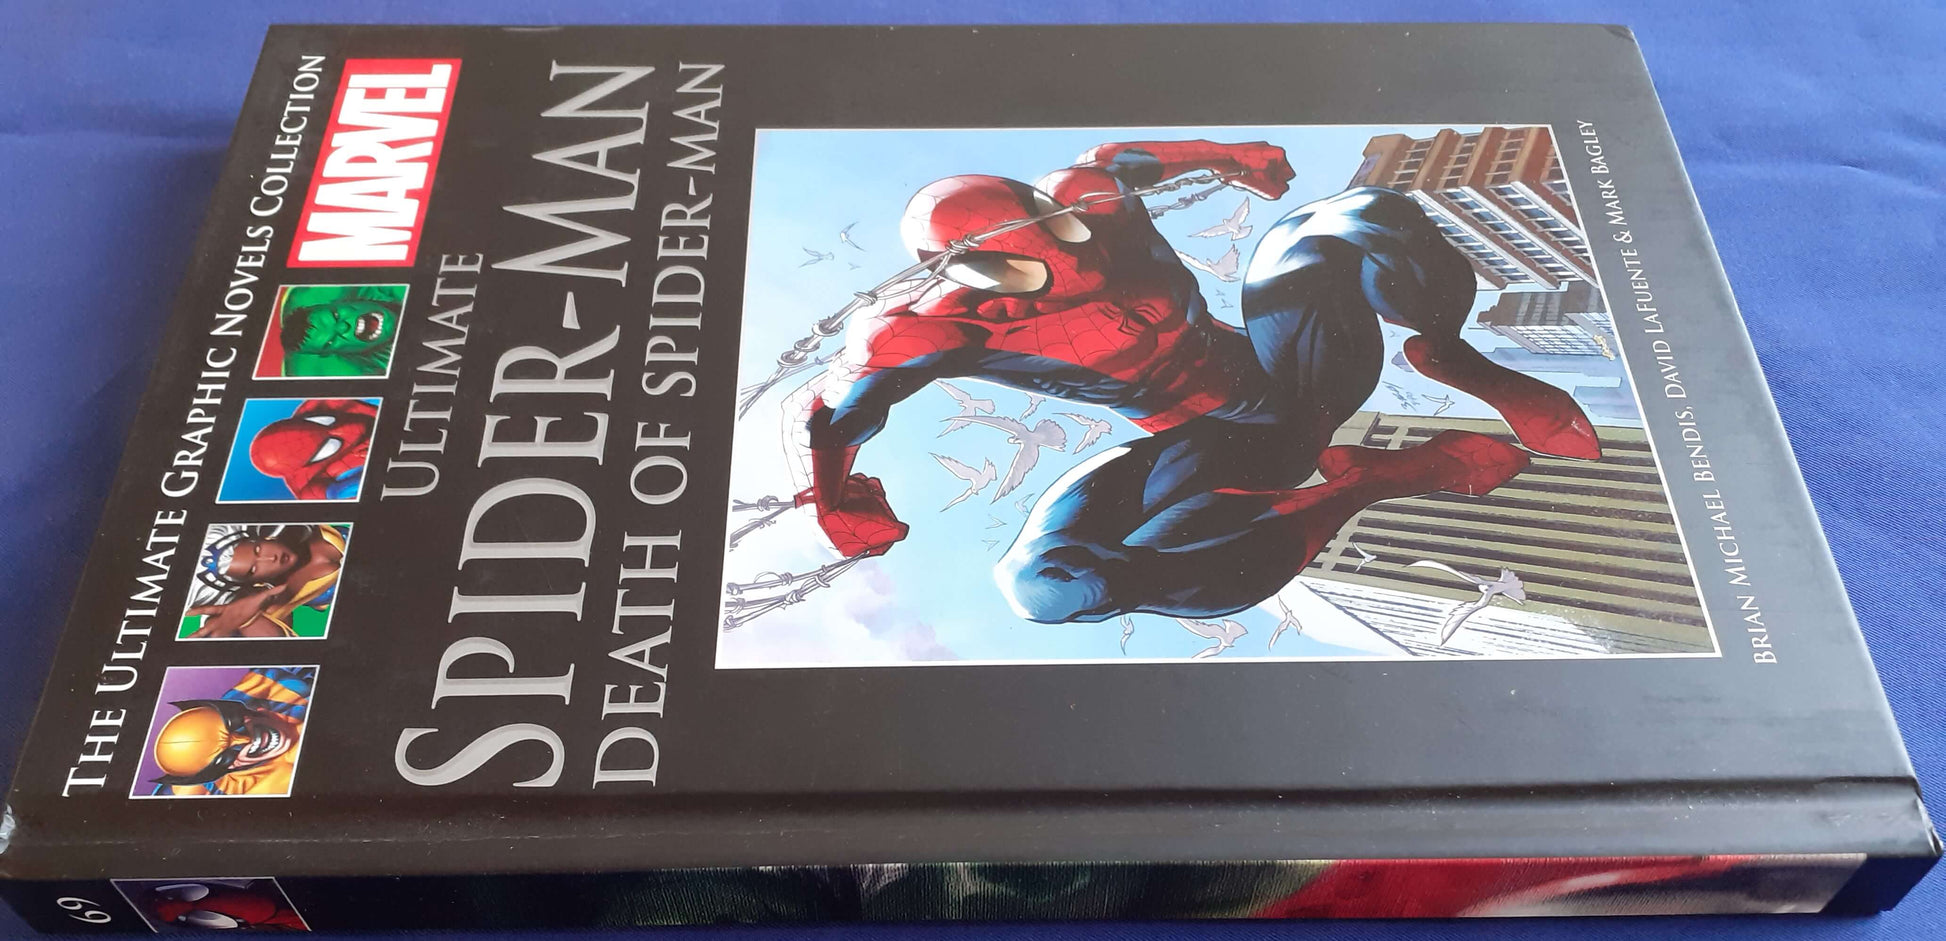 graphic novel, marvel graphic novels, marvel ultimate graphic collection, spider man, spiderman, ultimate spider man - Best Books